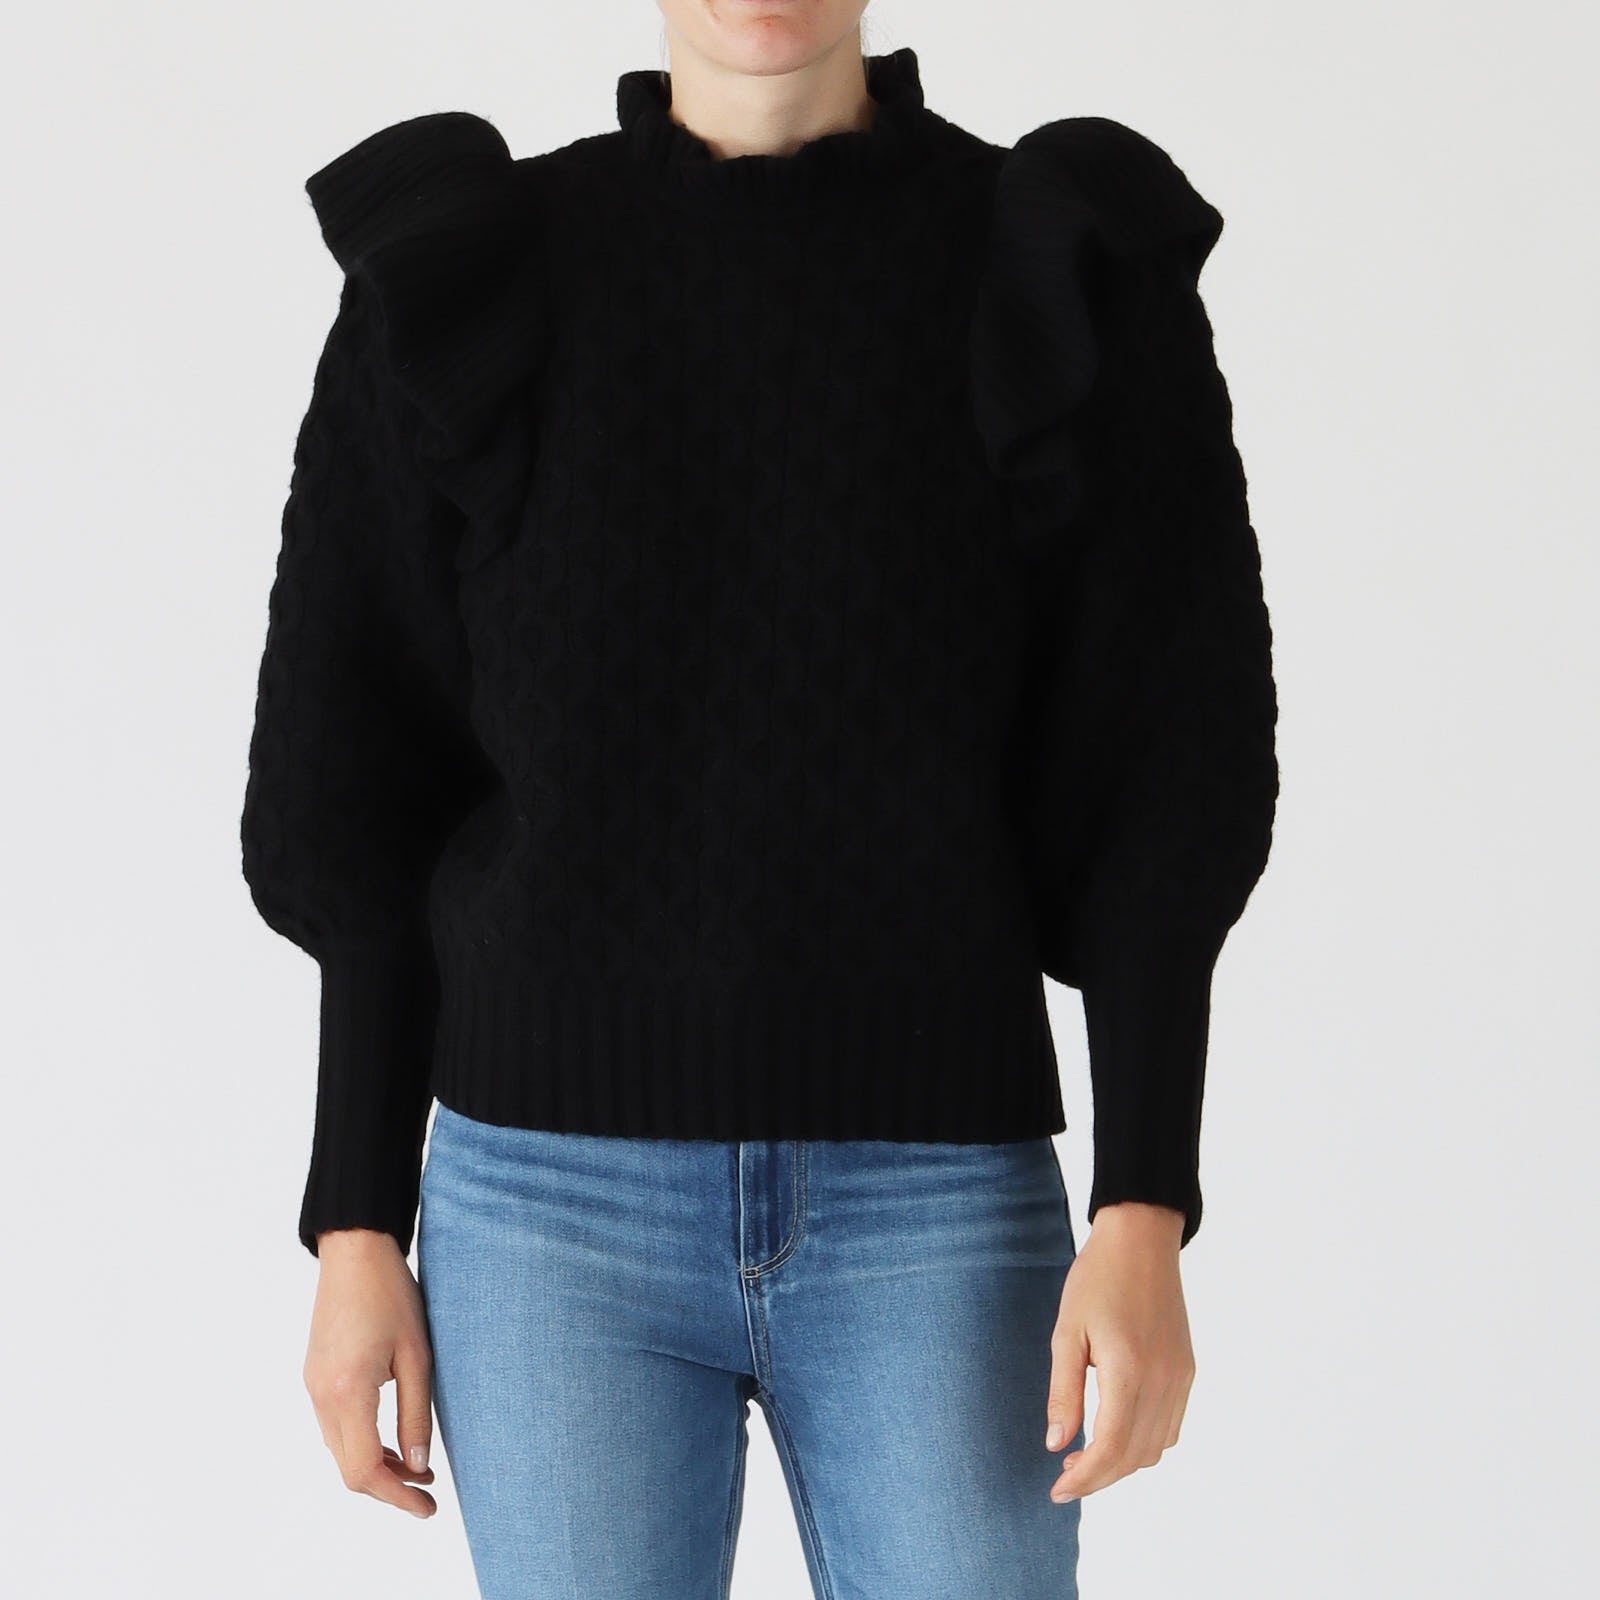 Sydnie Black Textured Knit Sweater